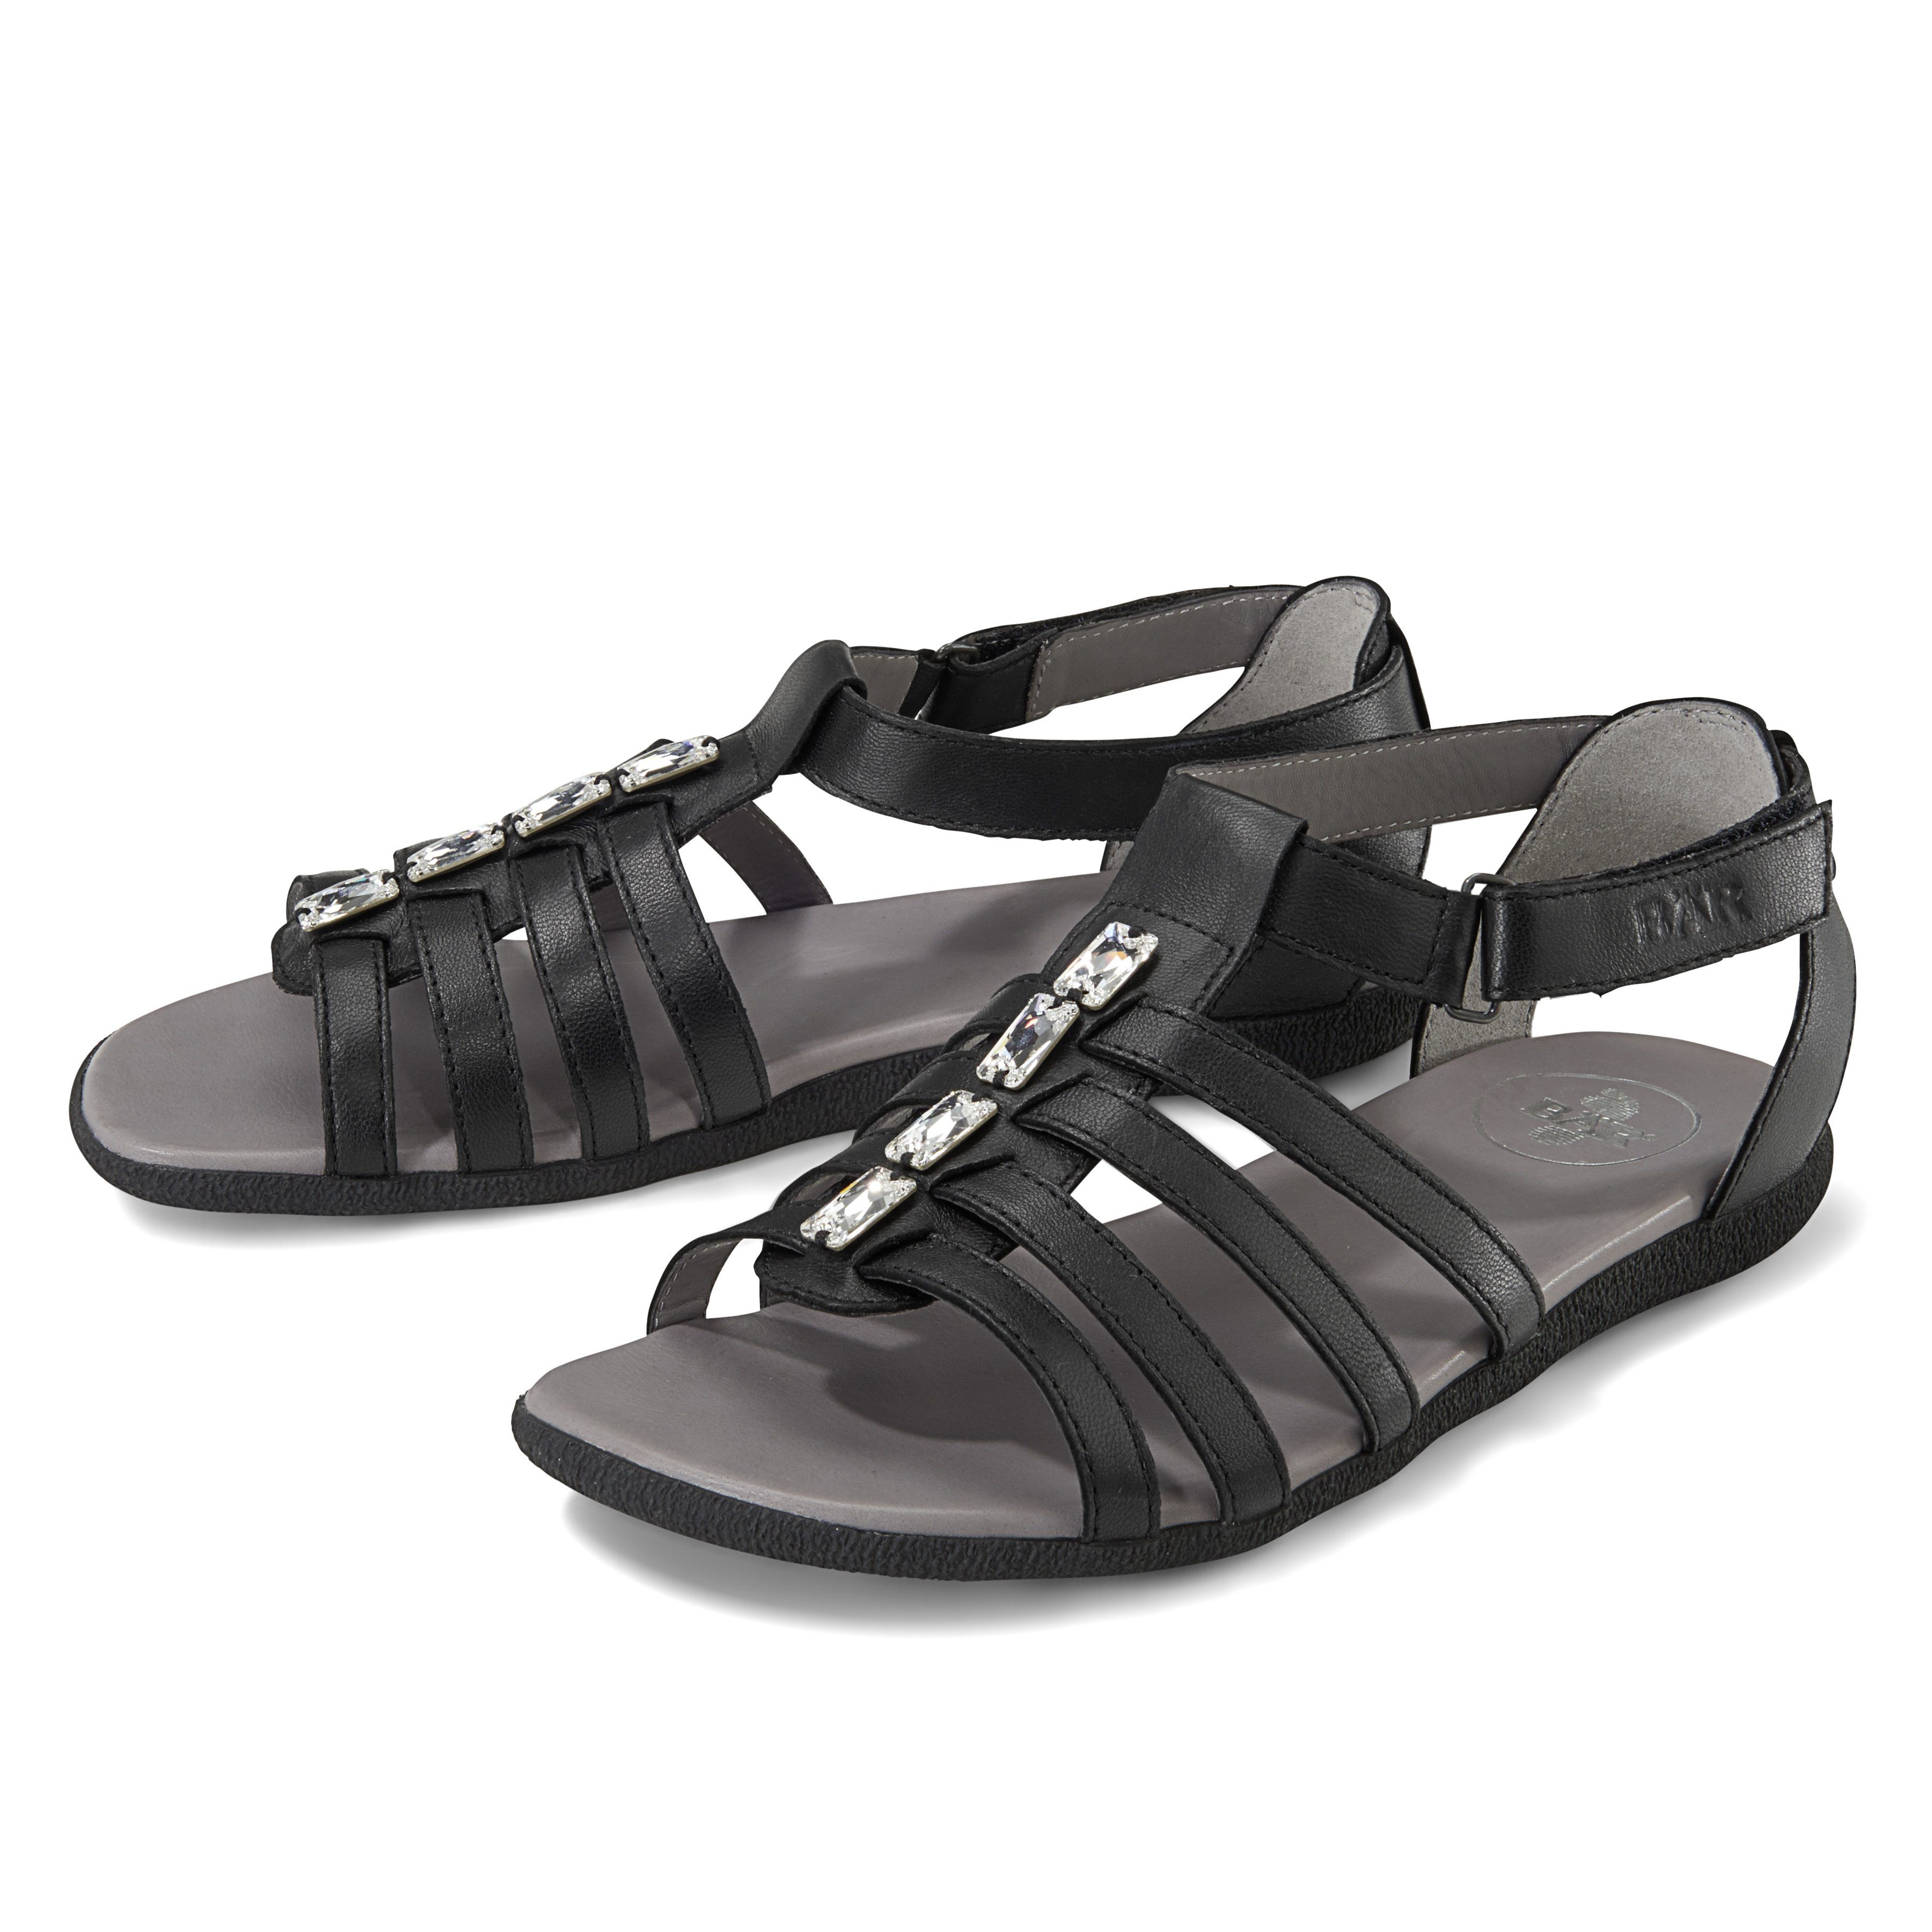 BÄR Damenschuh - Modell Elenor in der Farbe Schwarz Sandale